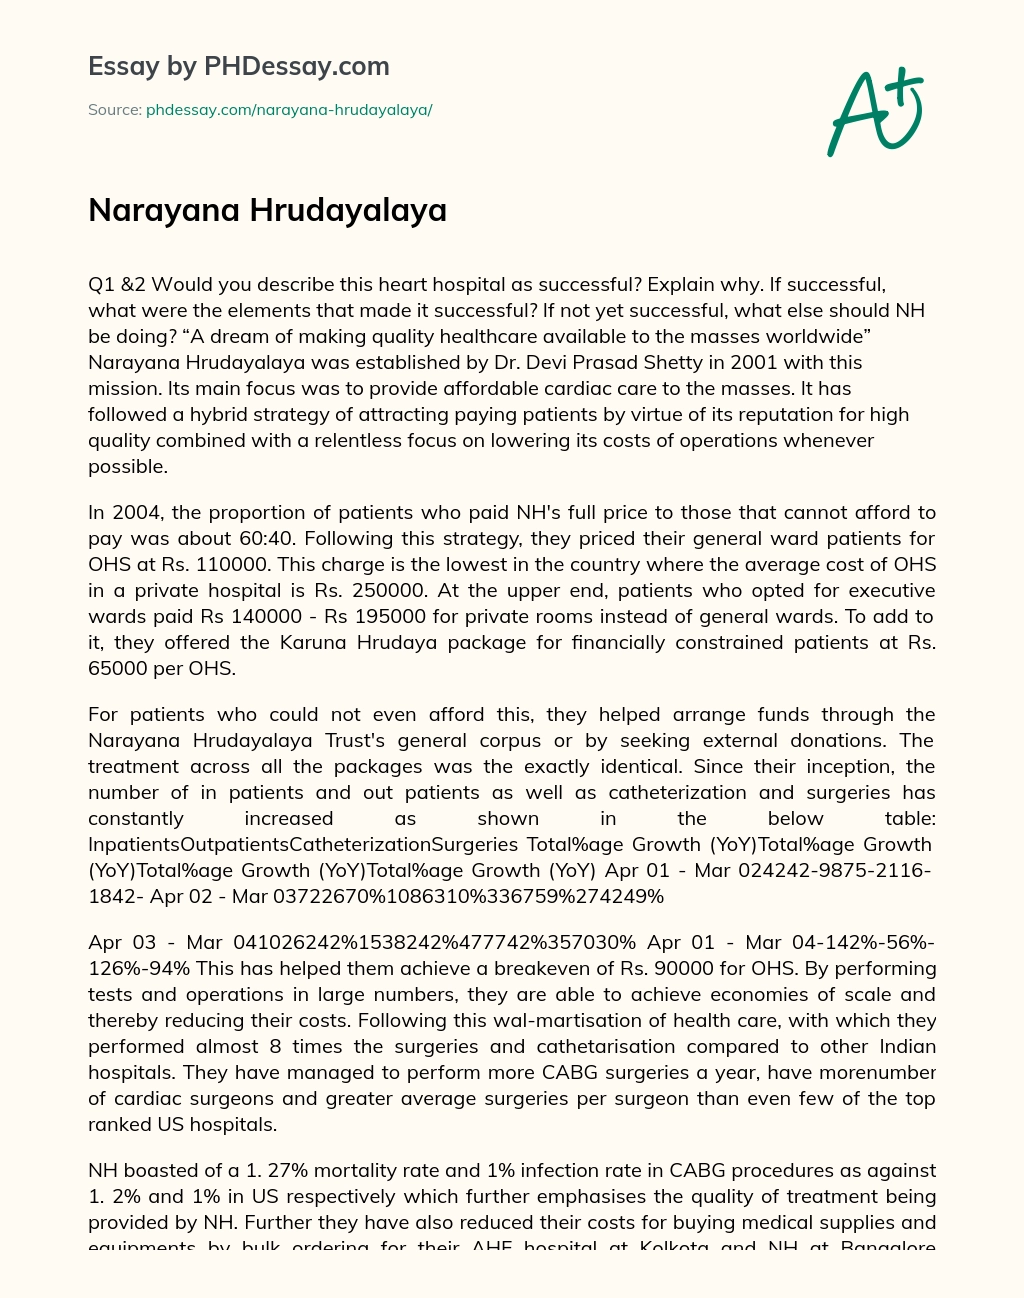 Narayana Hrudayalaya essay